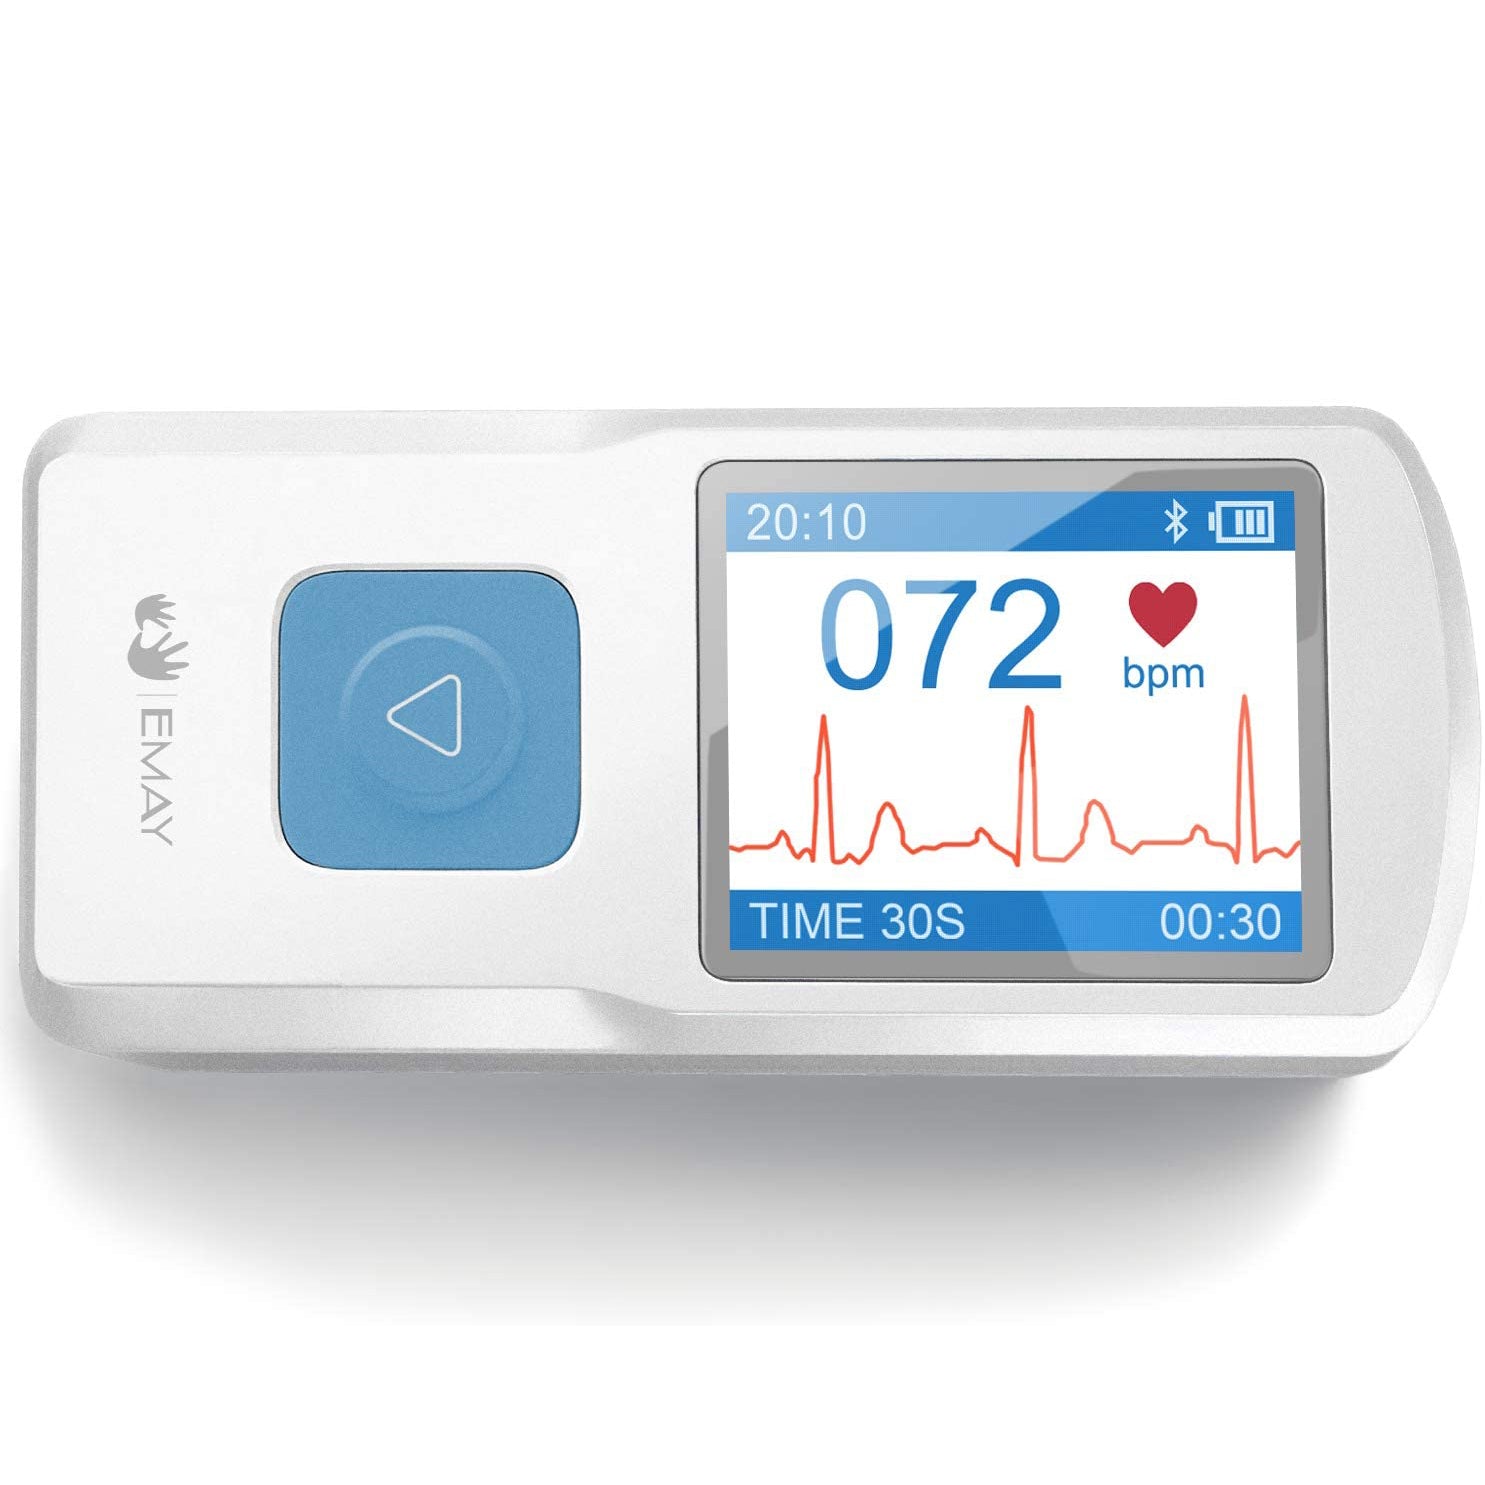 Portable EKG Monitor (Blue) – EMAY